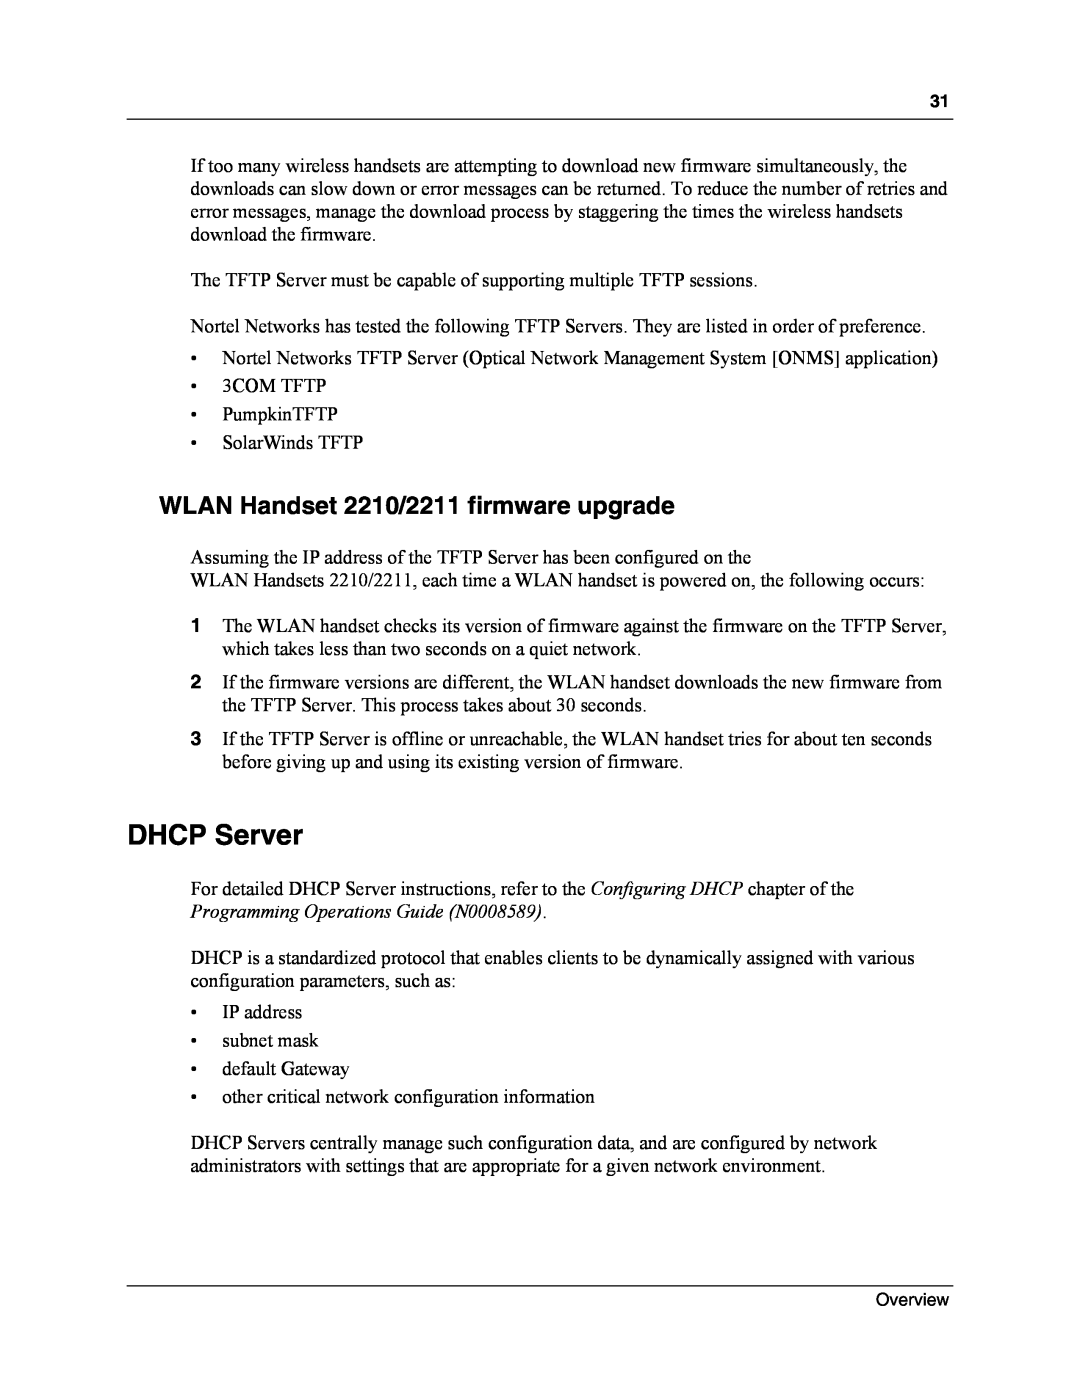 Nortel Networks MOG6xx, MOG7xx manual DHCP Server, WLAN Handset 2210/2211 firmware upgrade 